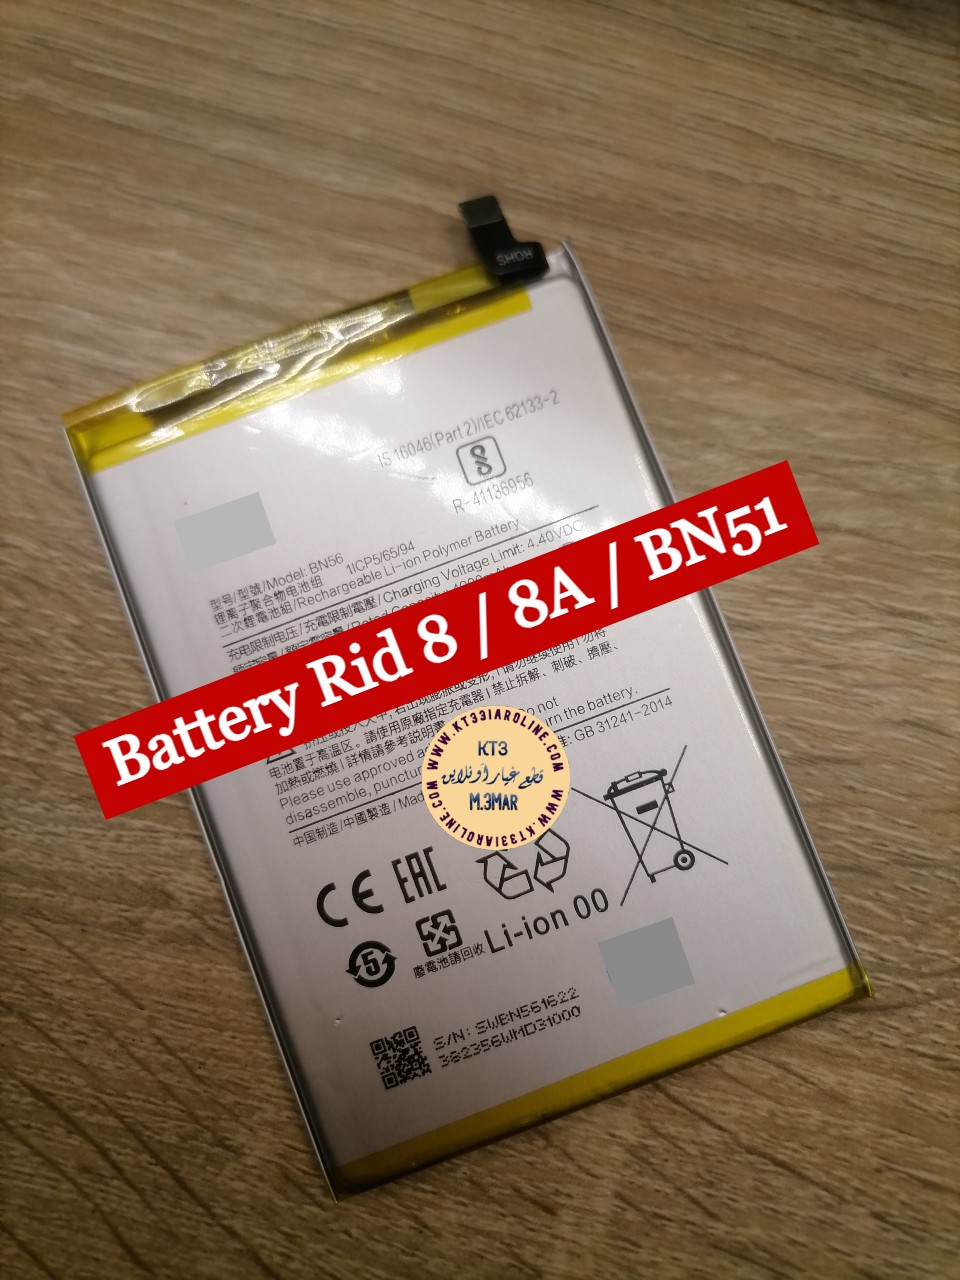 price battery redmi 8a 8a bn51